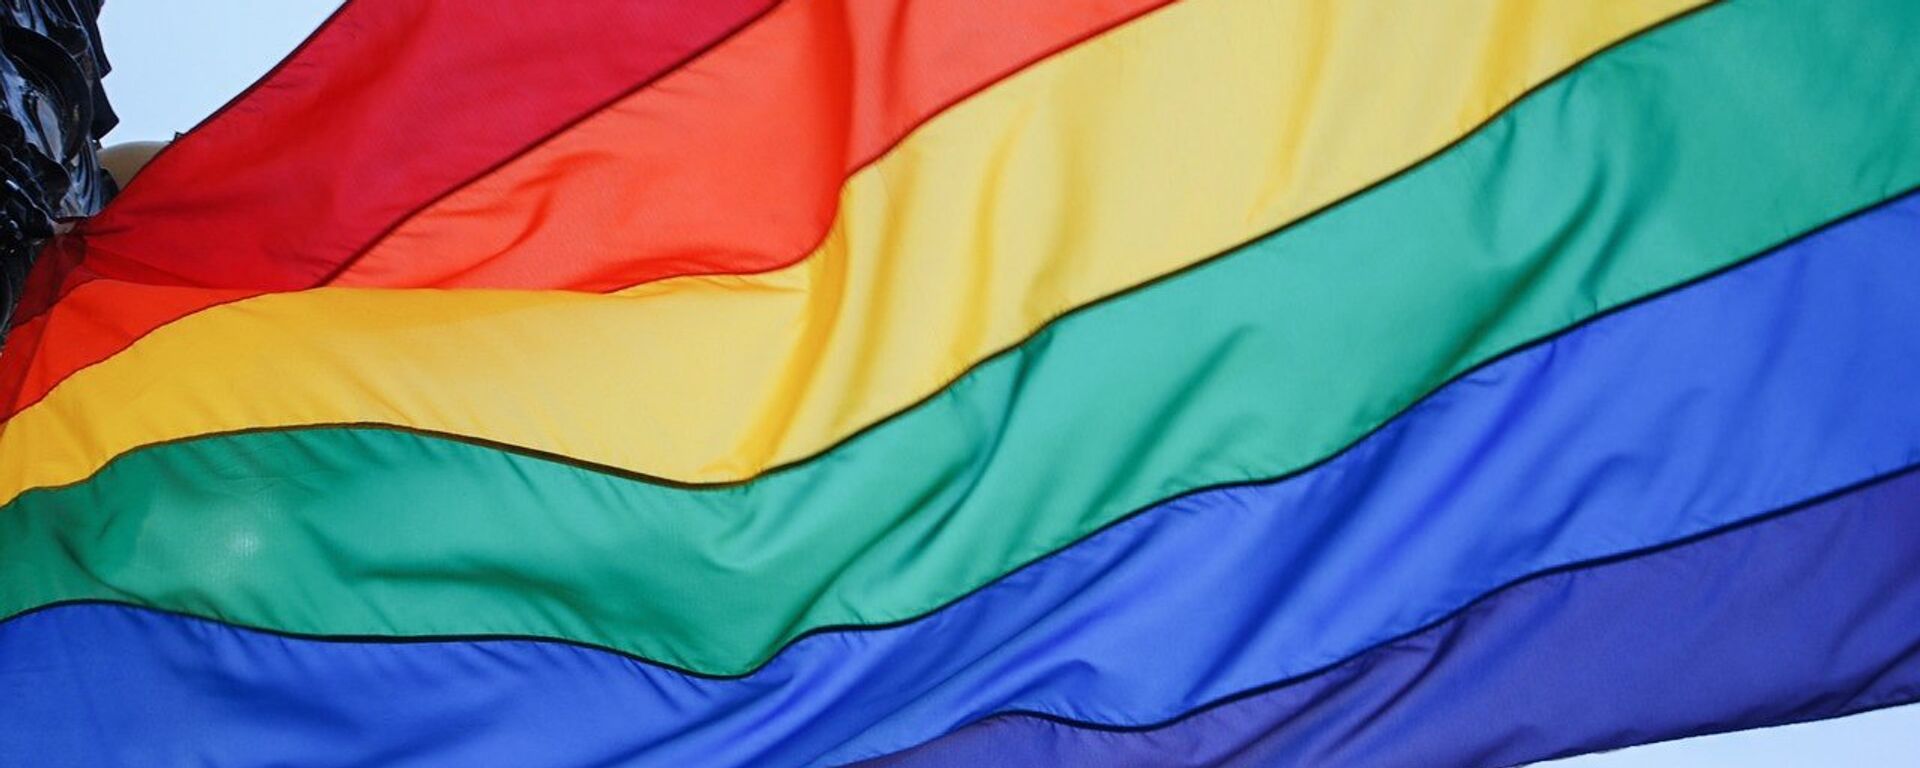 Bandera arcoíris, símbolo del movimiento LGBT - Sputnik Mundo, 1920, 03.06.2022